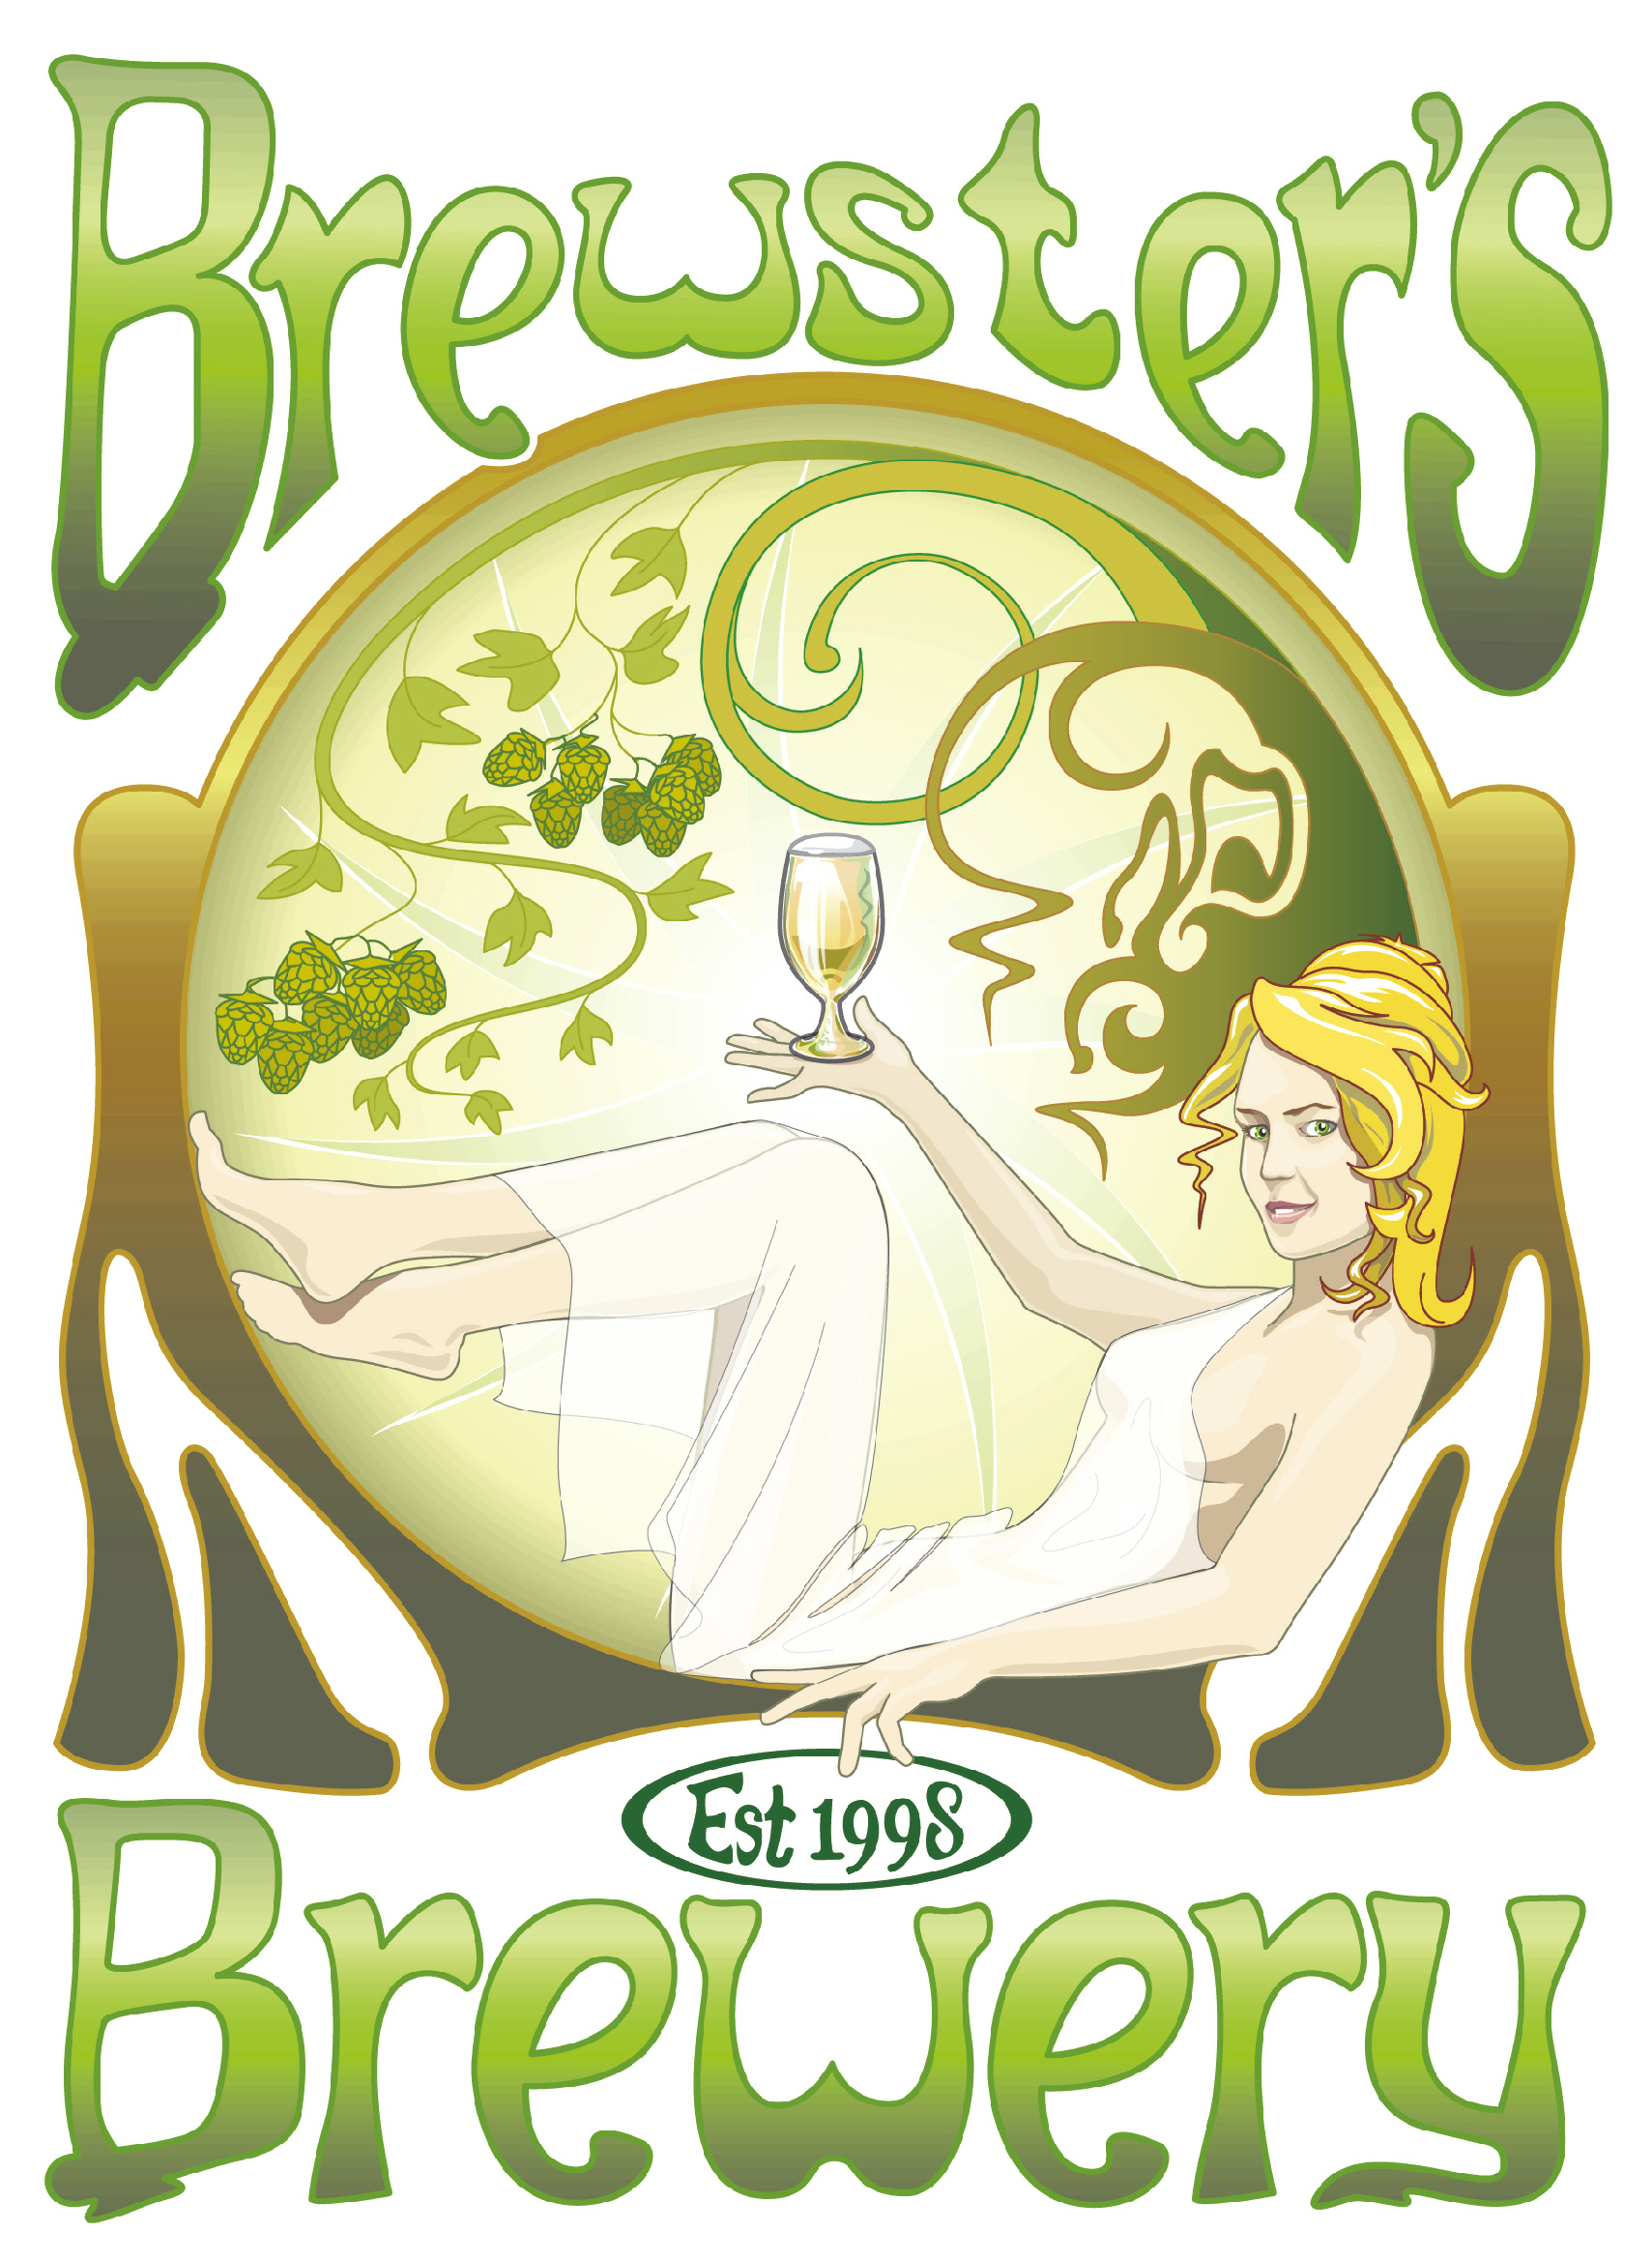 Brewster’s Brewery